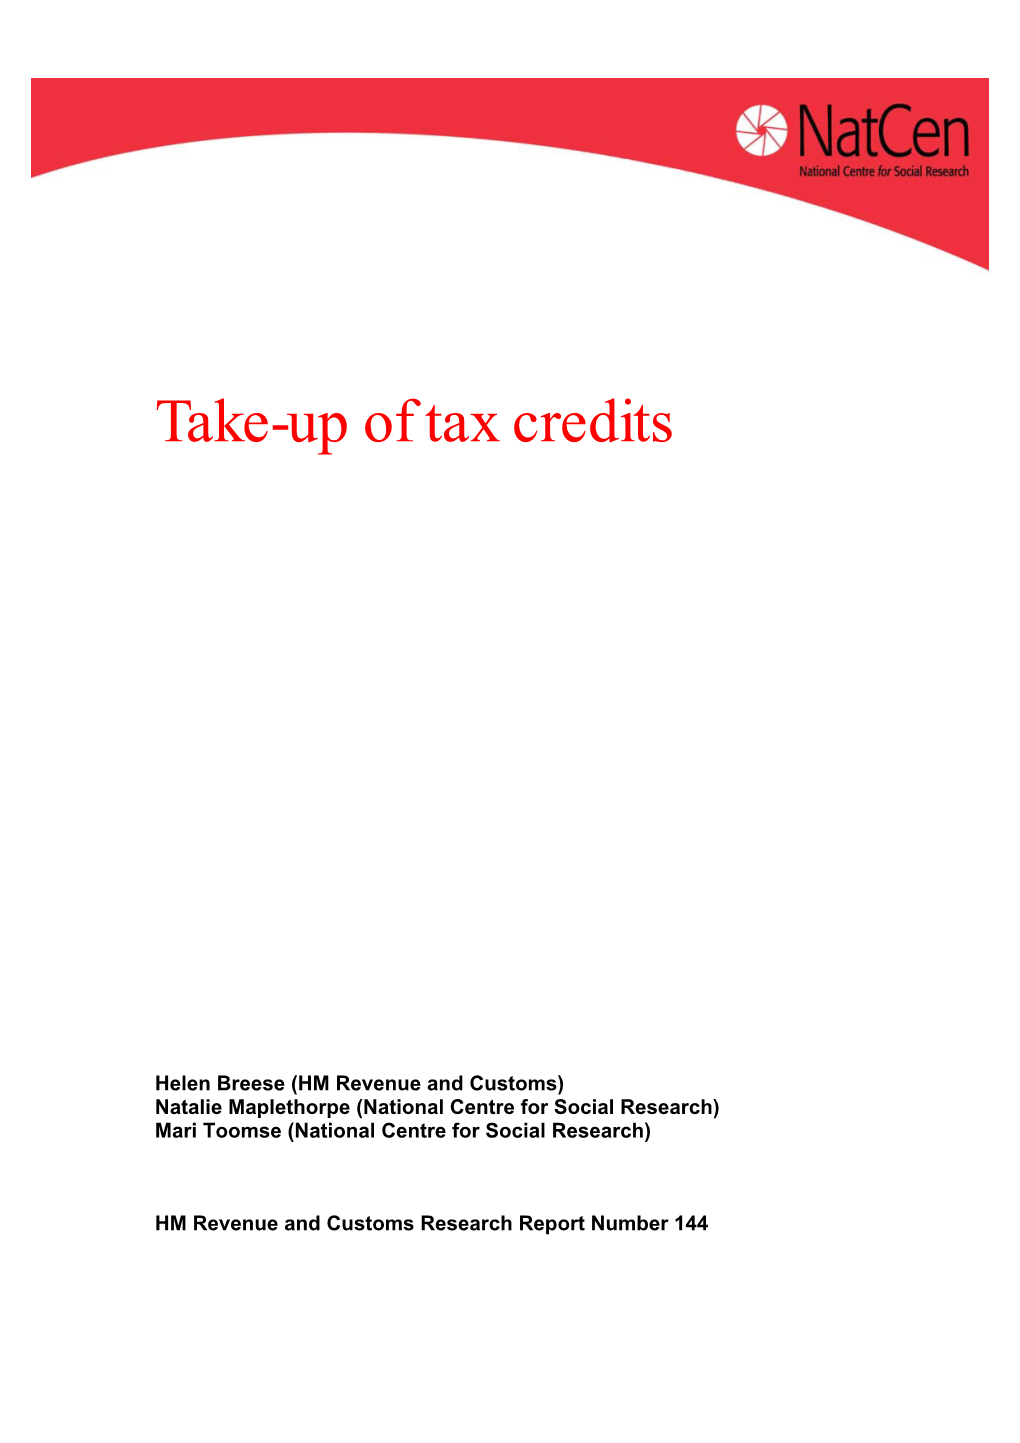 Take-Up of Tax Credits